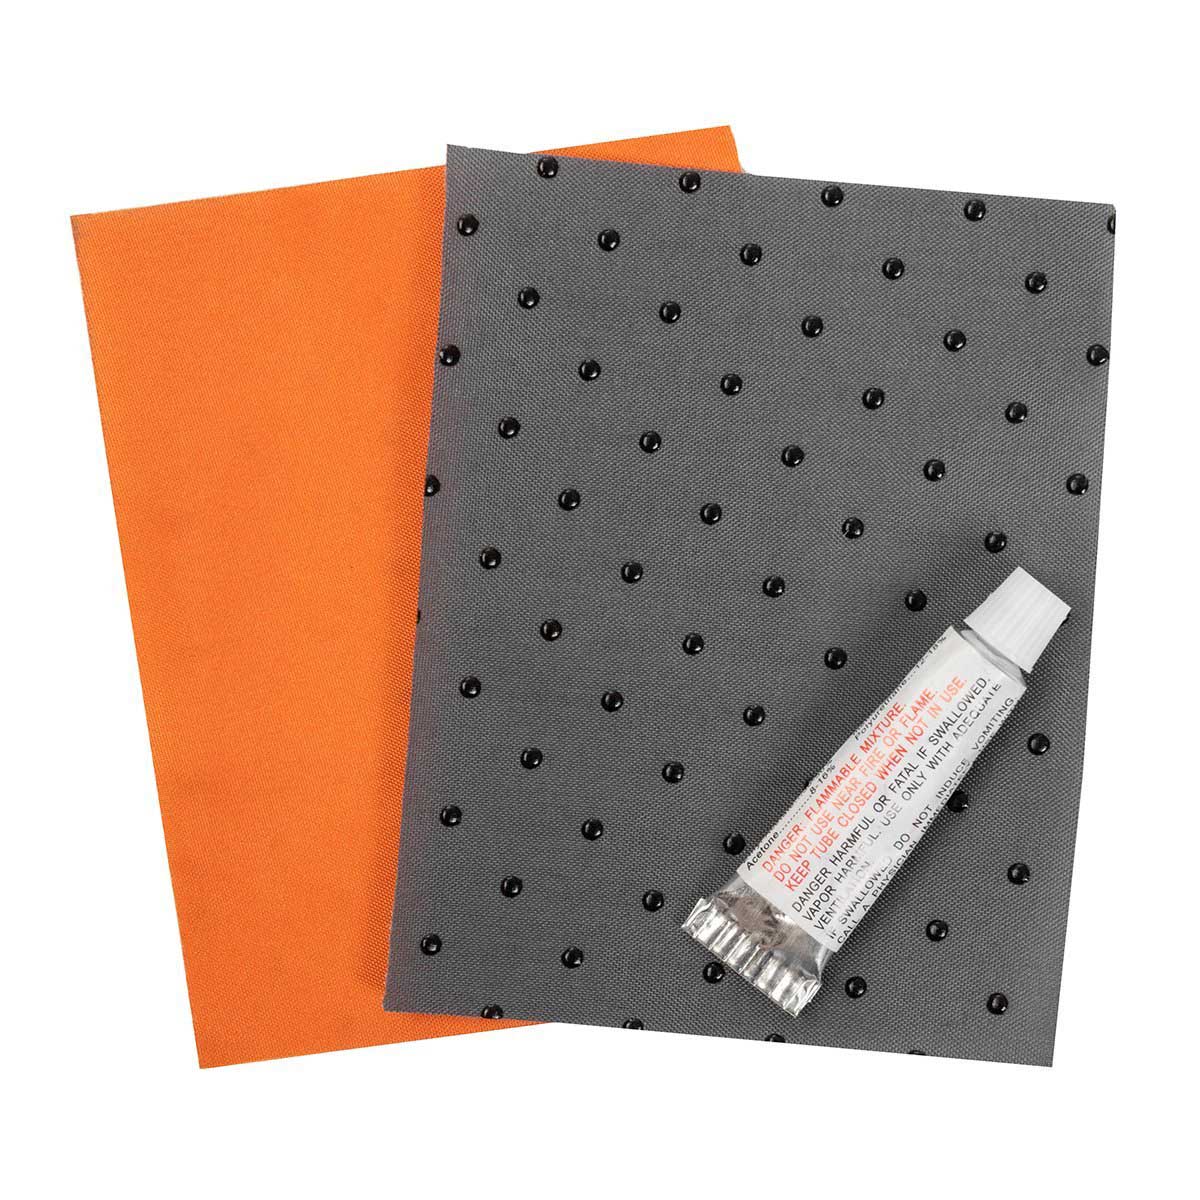 Repair Kit for an Orange Self Inflating Sleeping Pad